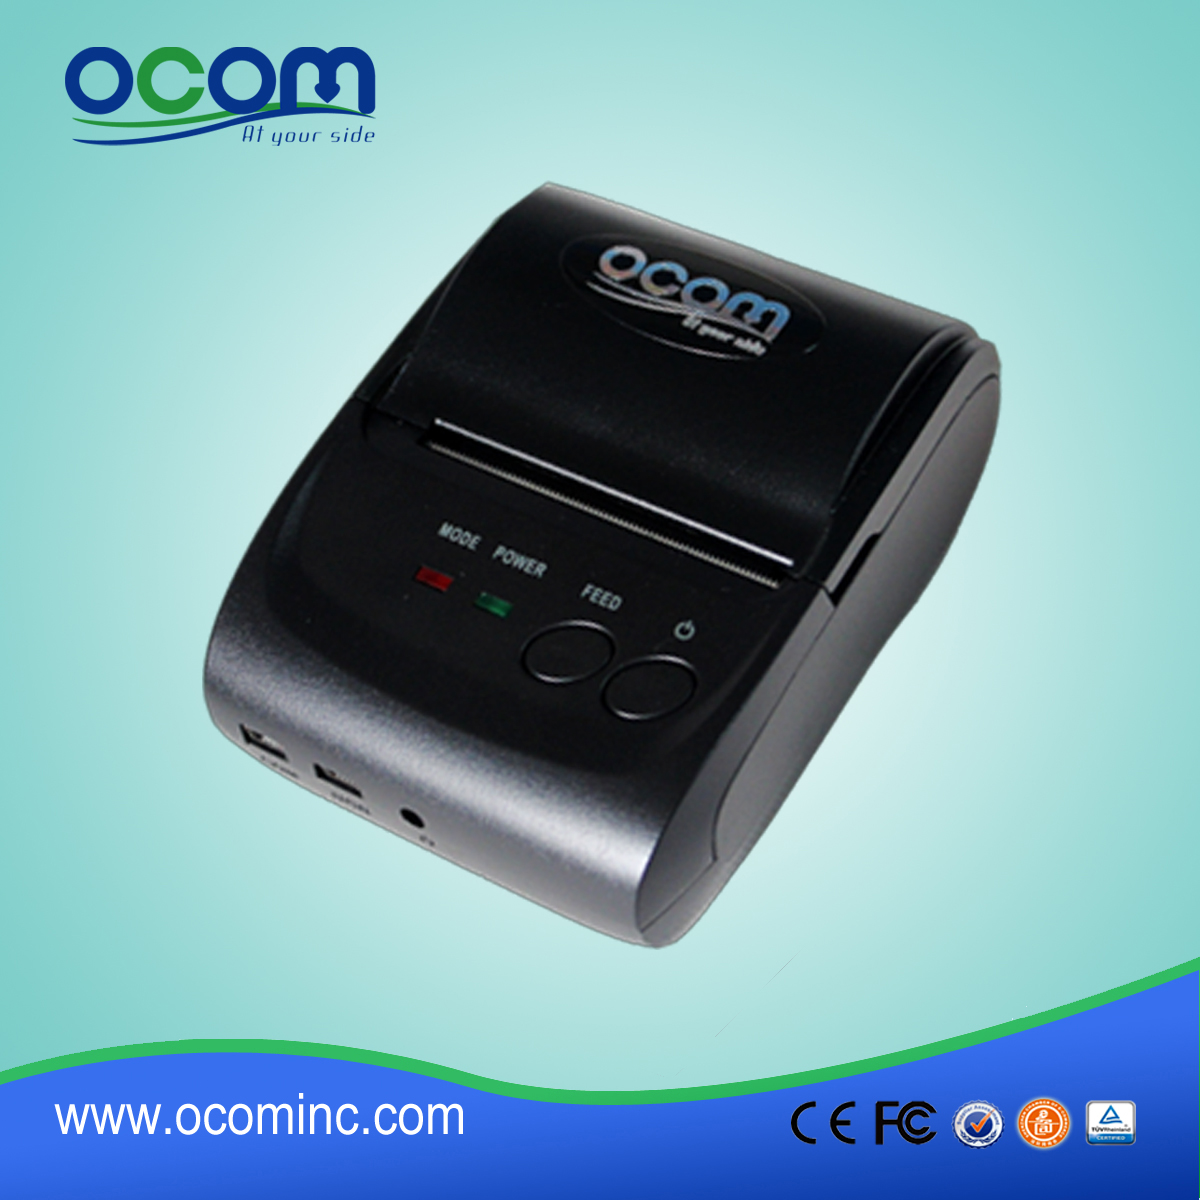 OCPP-M05: 58 Bluetooth термопринтер, мини-термопринтер